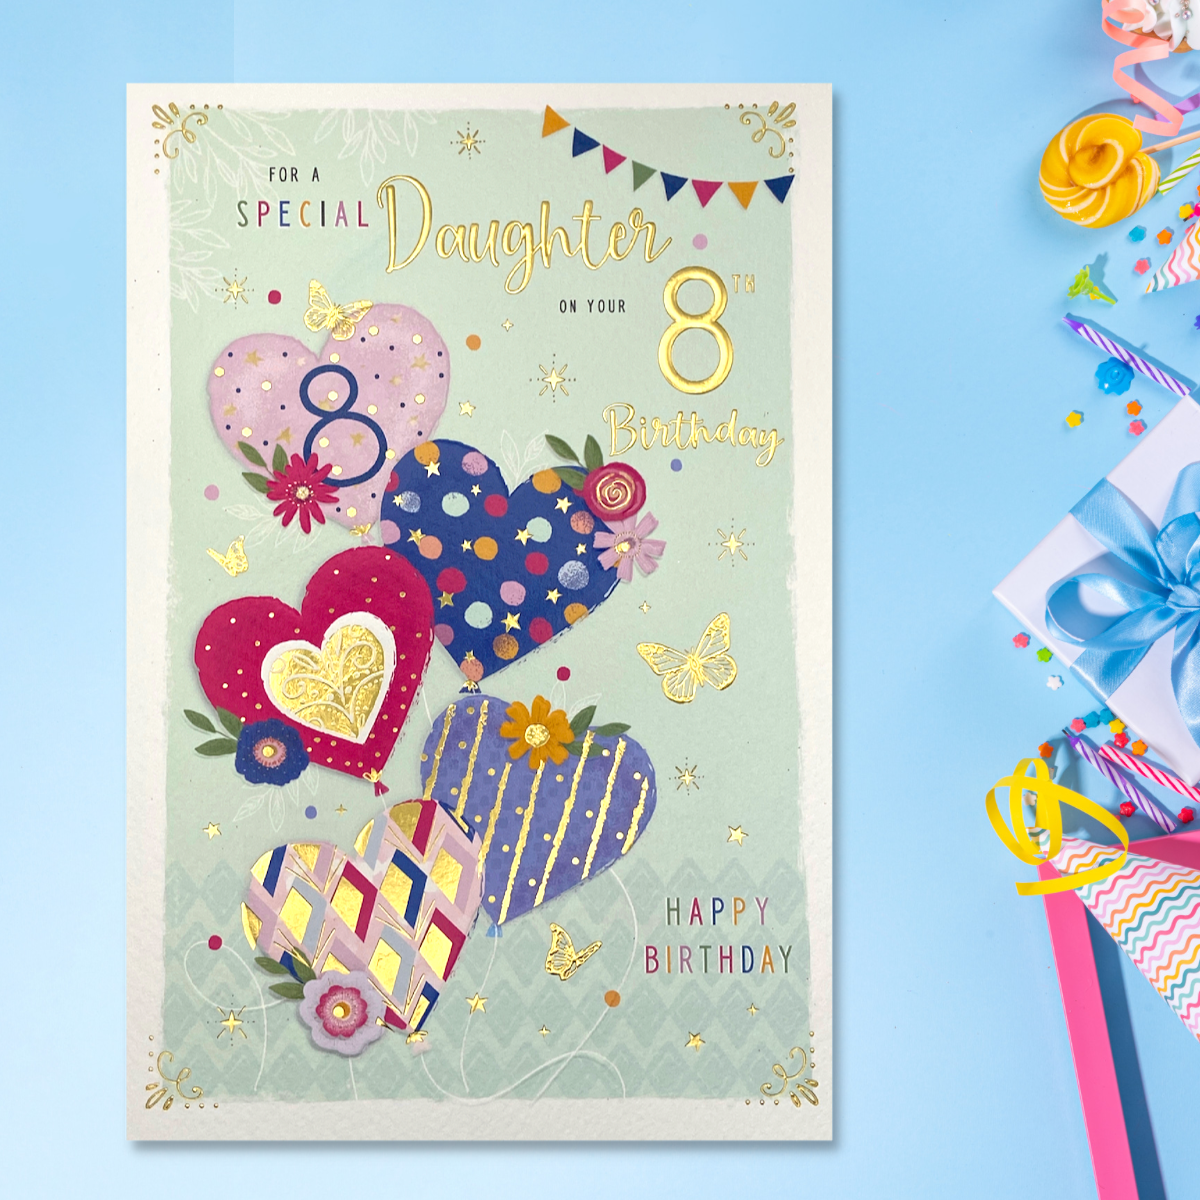 Daughter 8th Birthday Card - Heart Balloons